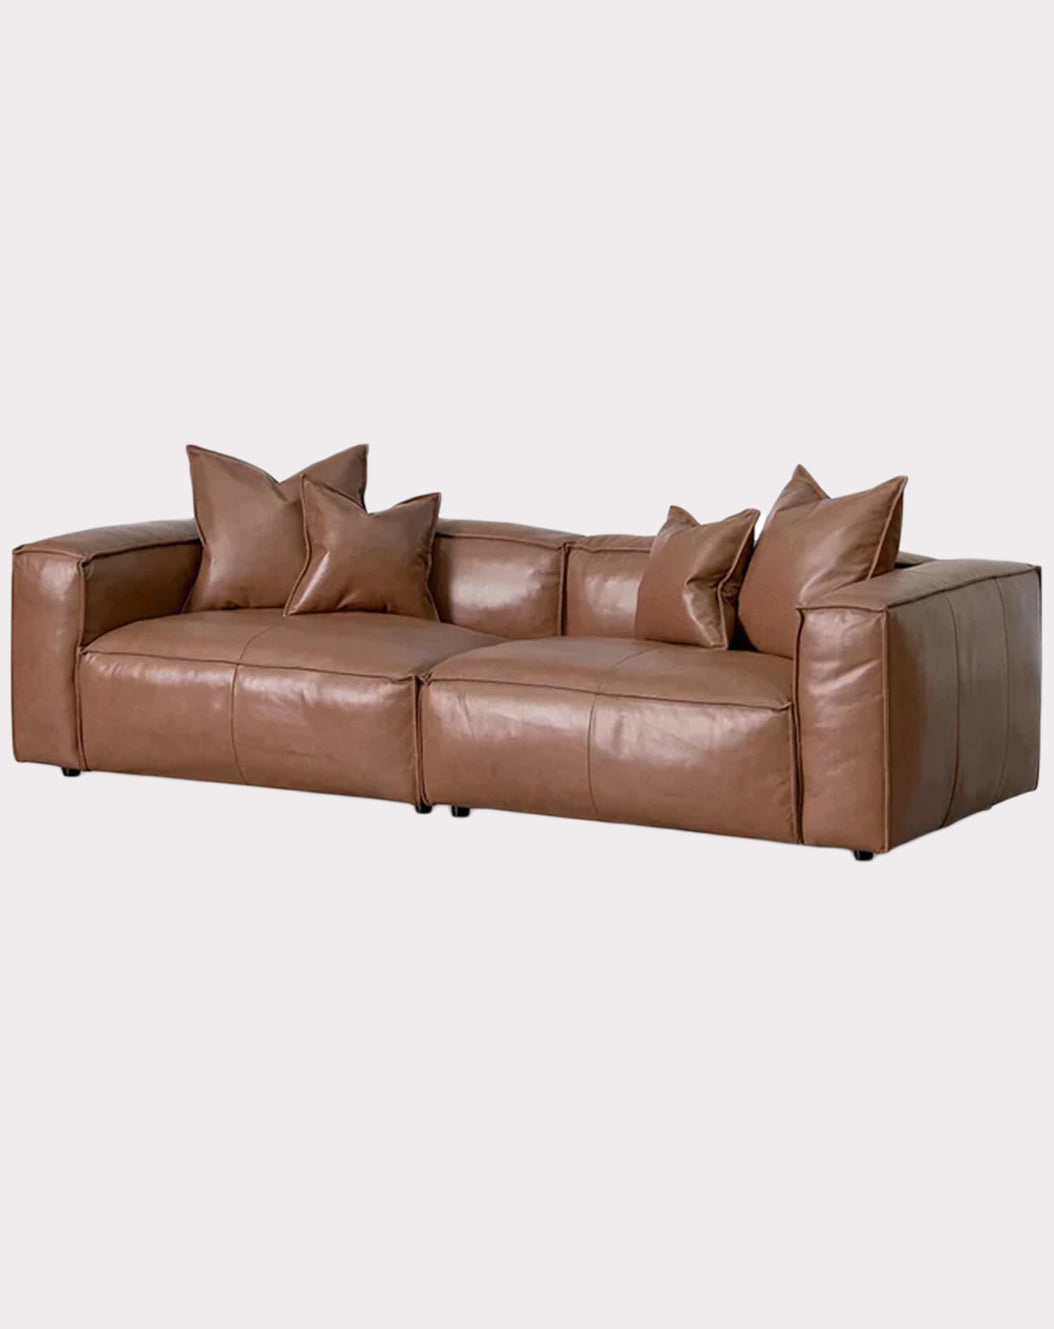 Morgan 4 Seater Sofa - Caramel Brown